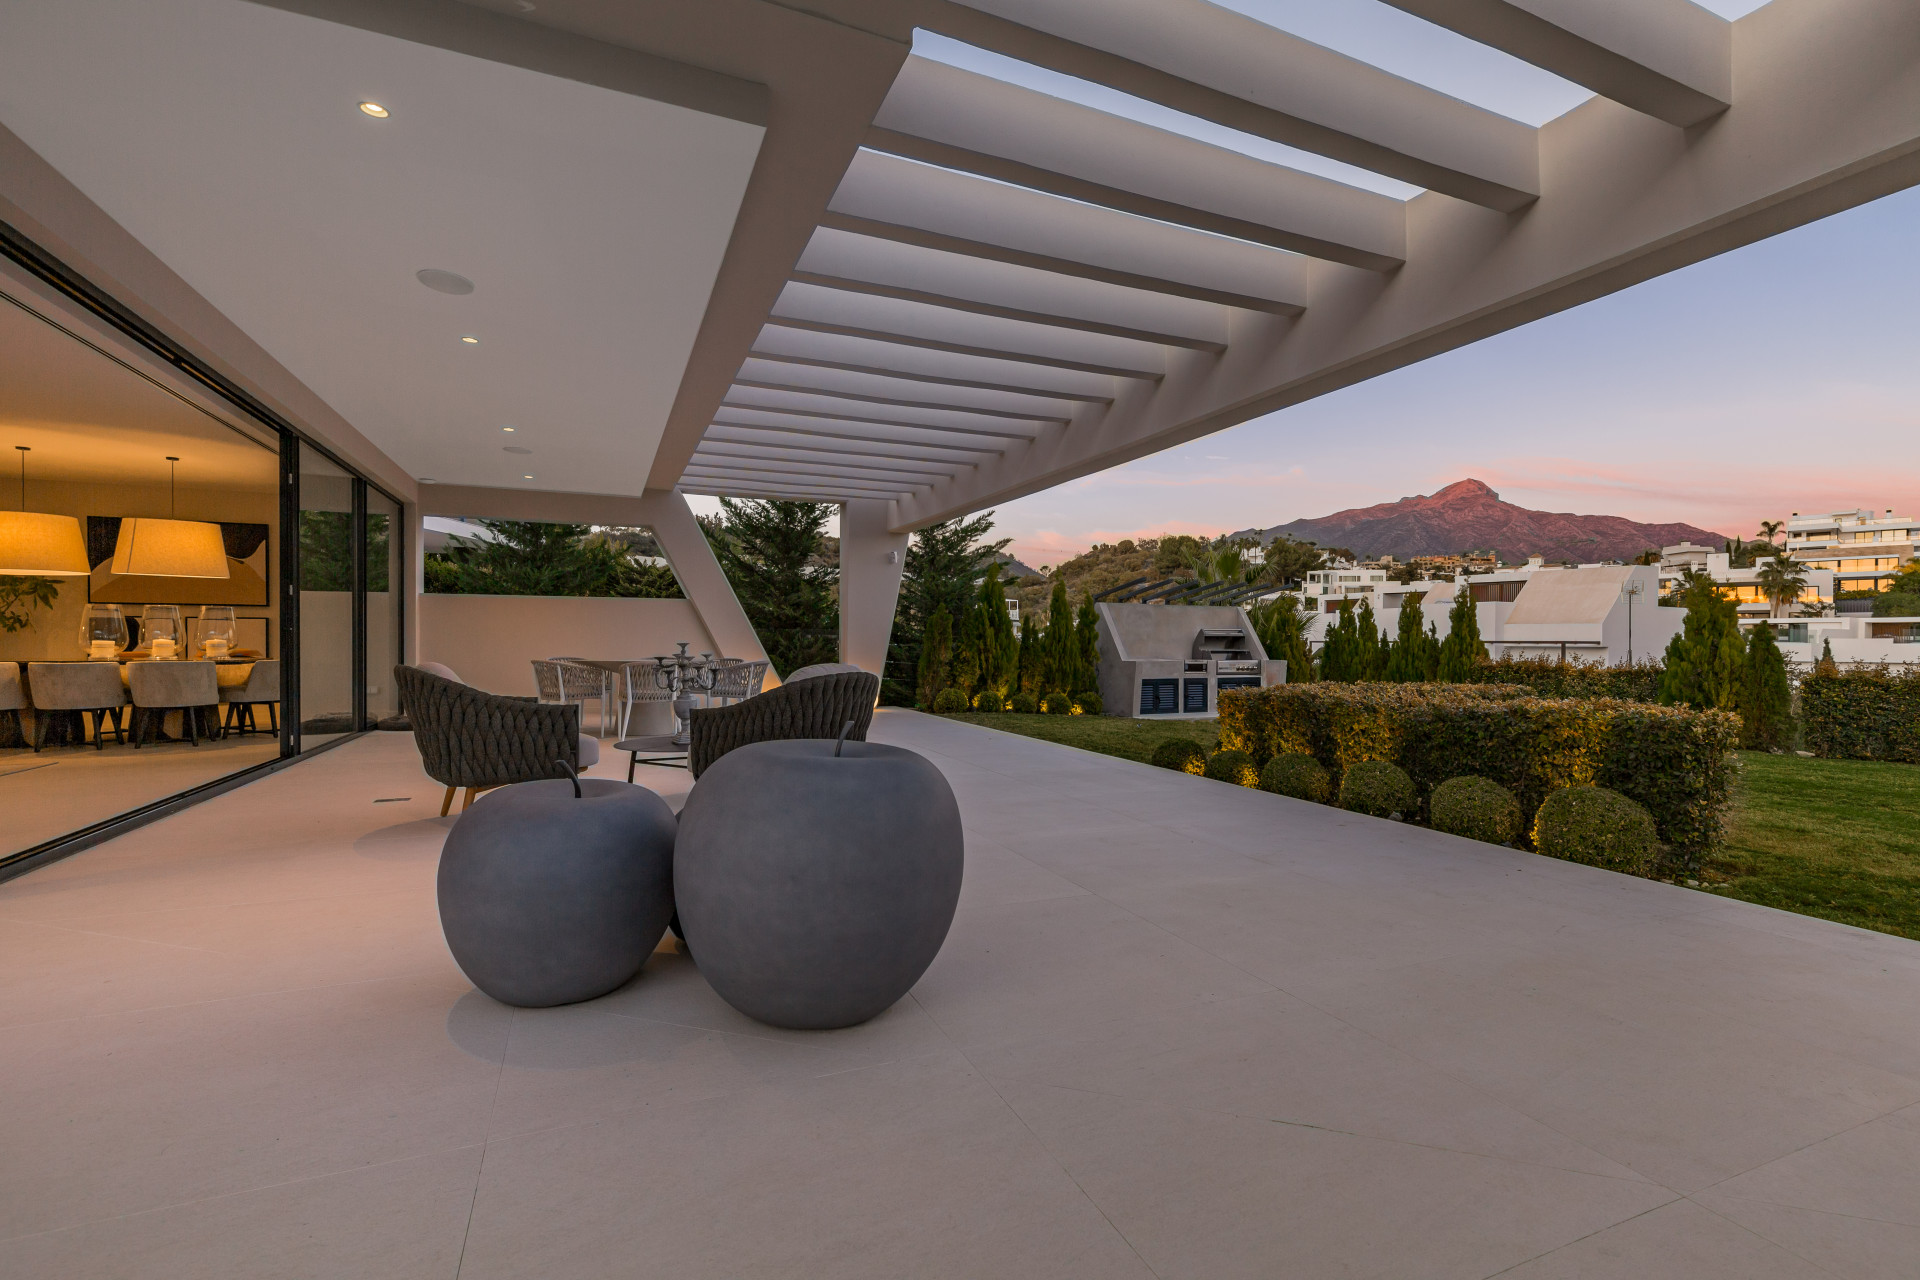 A superb contemporary 6 bedroom villa in Nueva Andalucia, close to all amenities and close to Los Naranjos Golf Club.